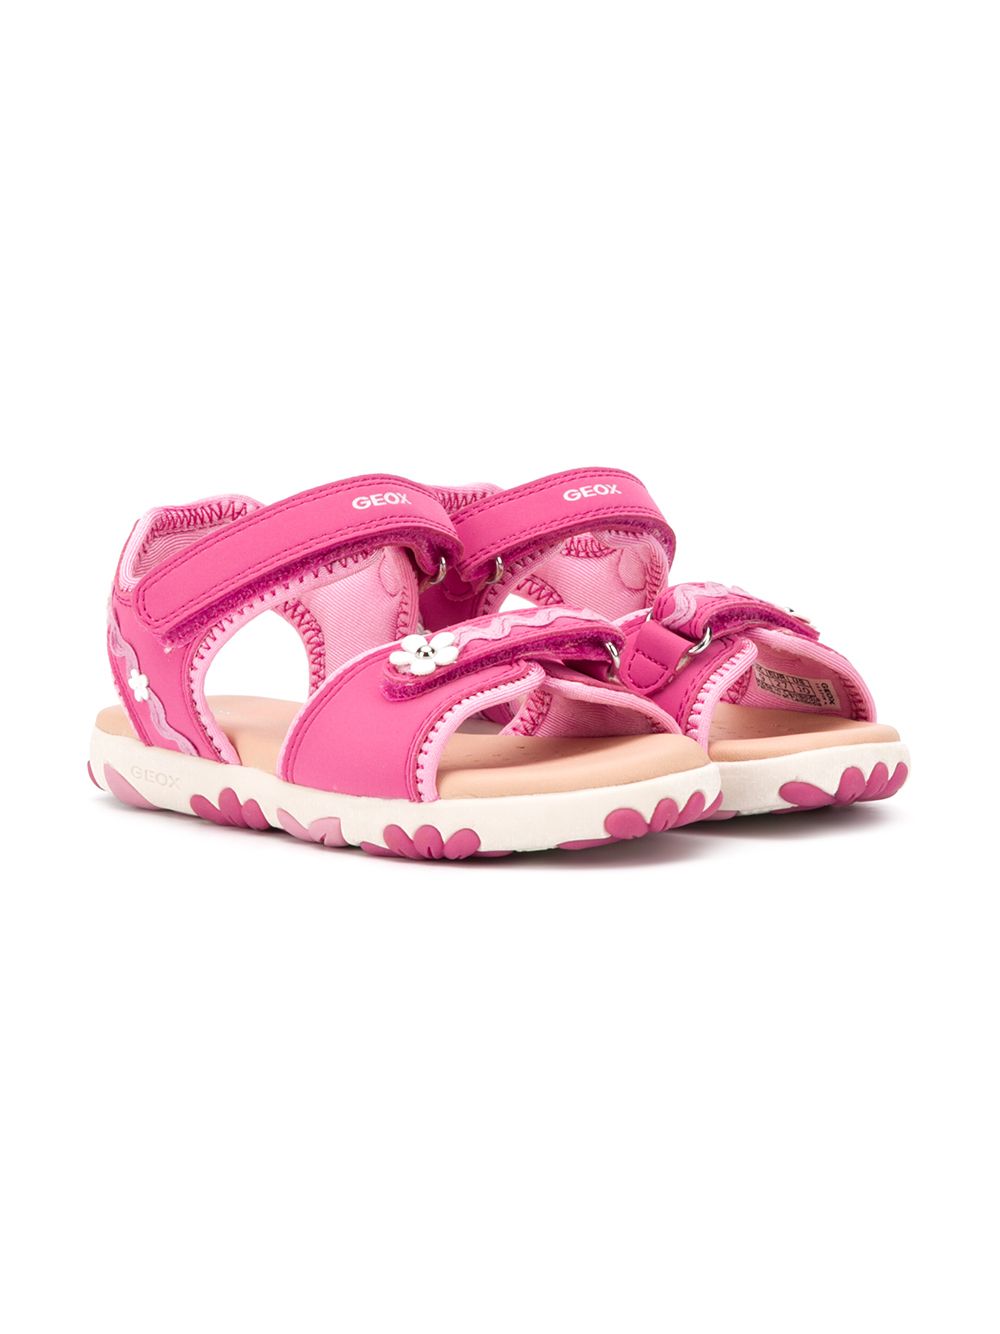 Geox Kids' Haiti Sandals In Pink